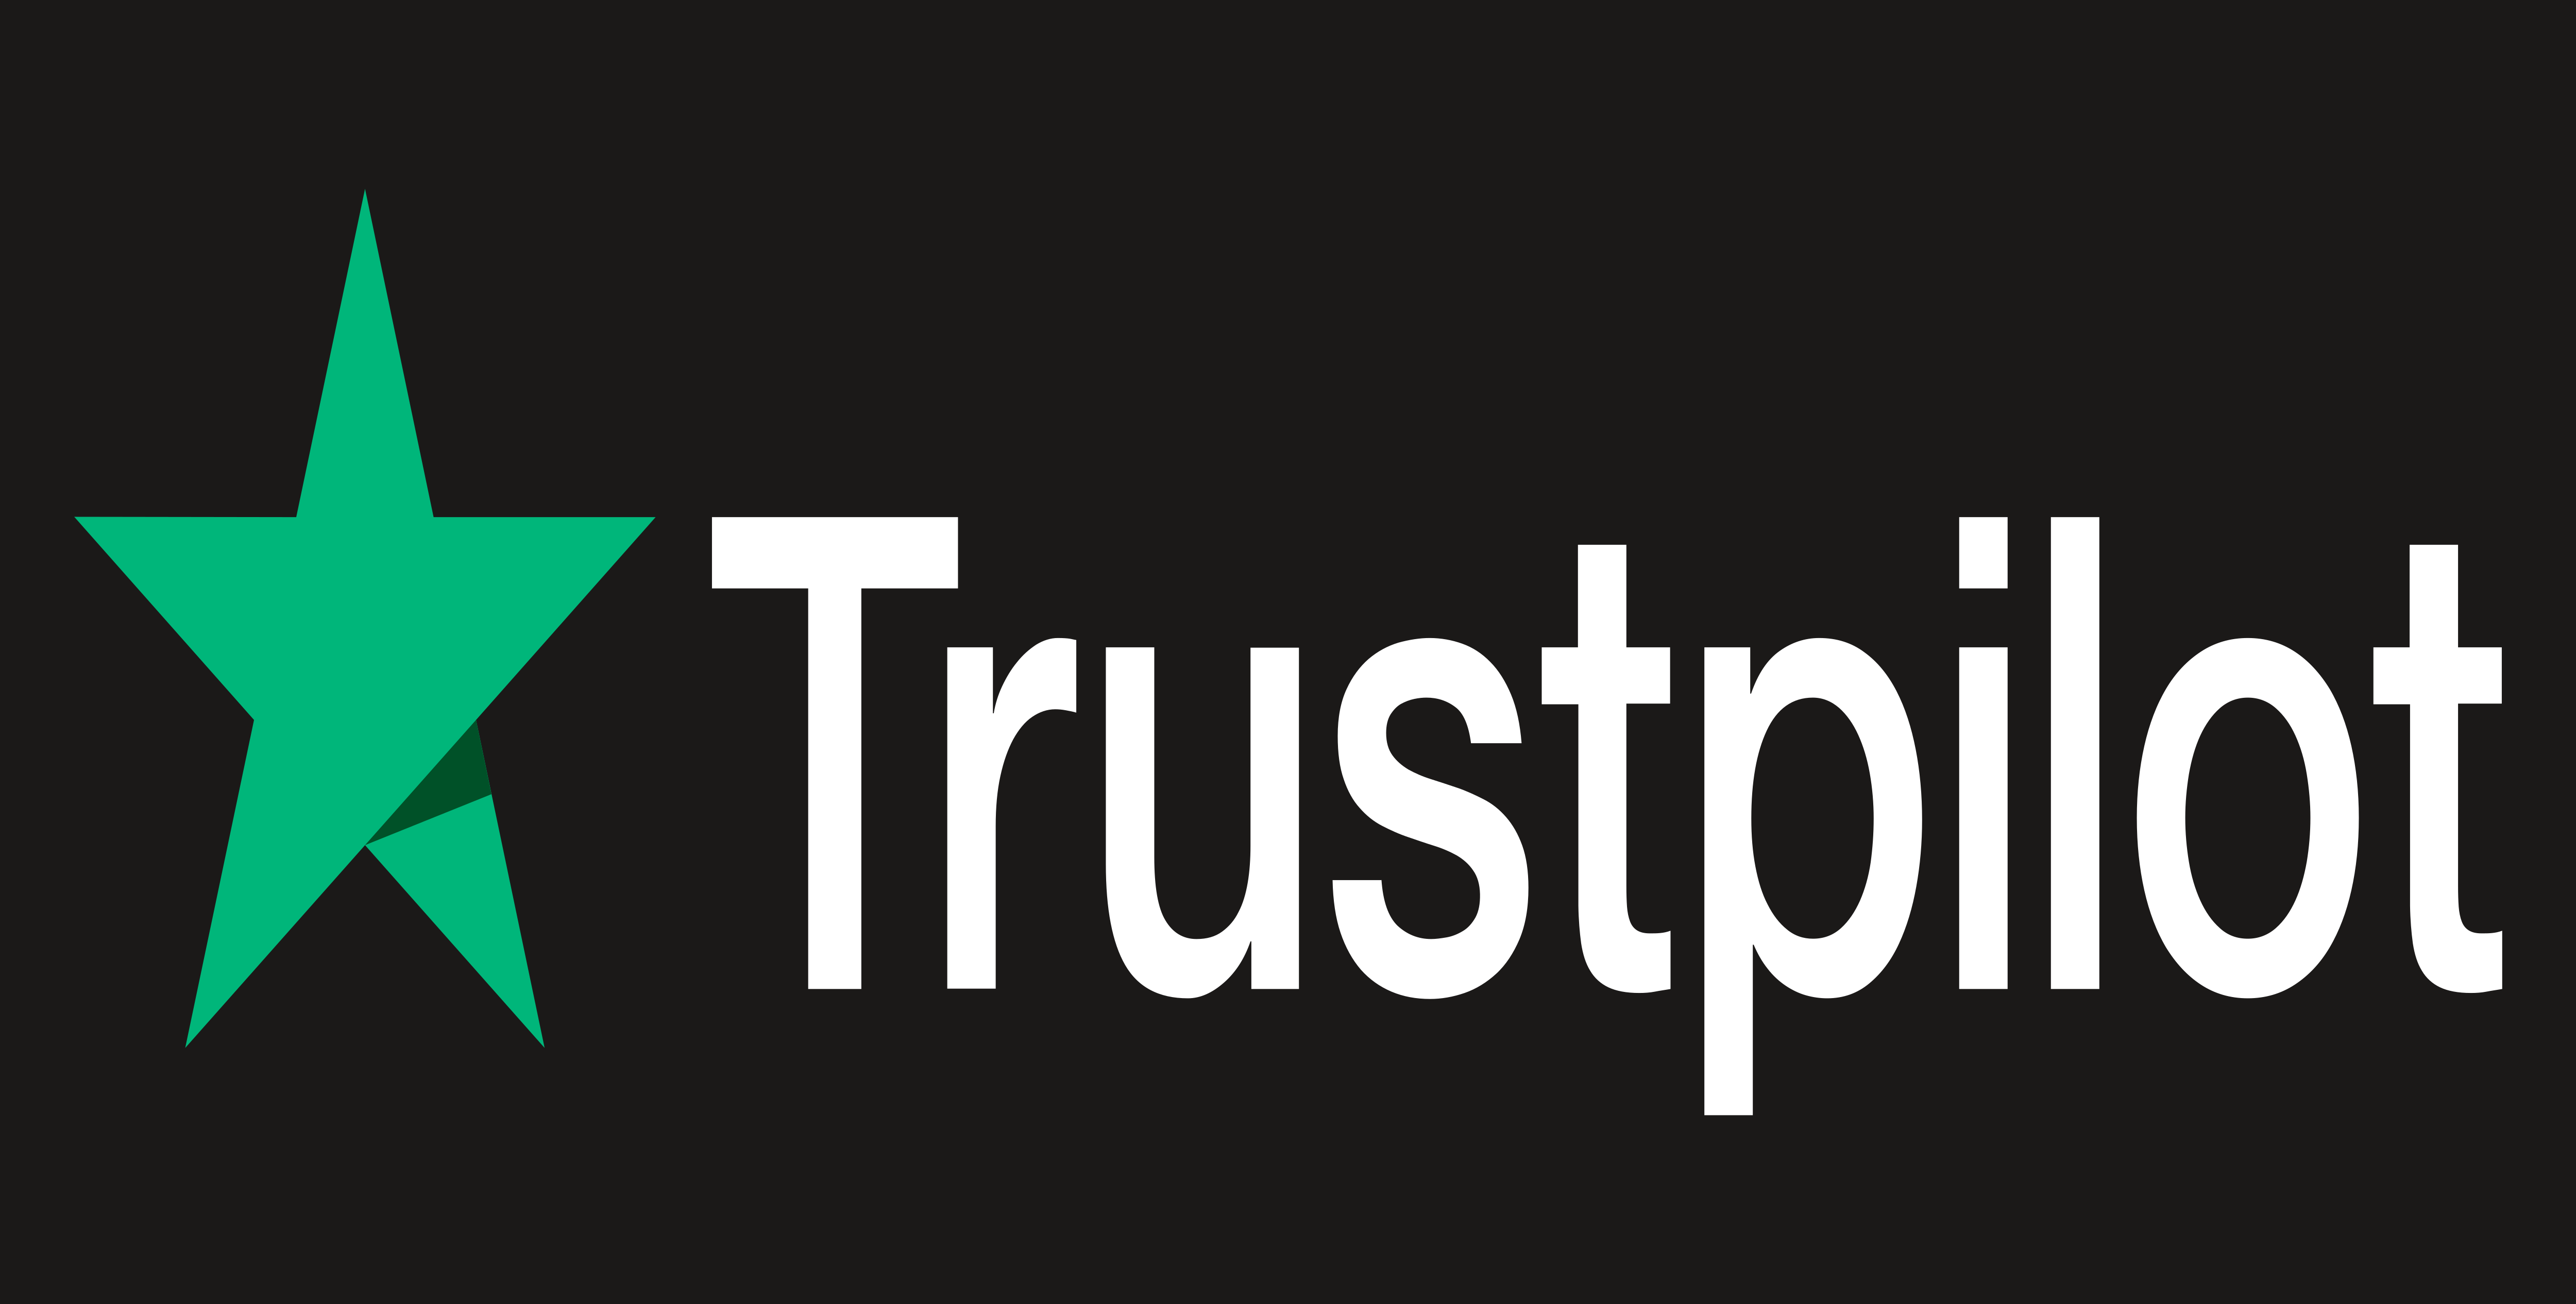 public/uploads/2020/09/Trustpilot_Logo.png